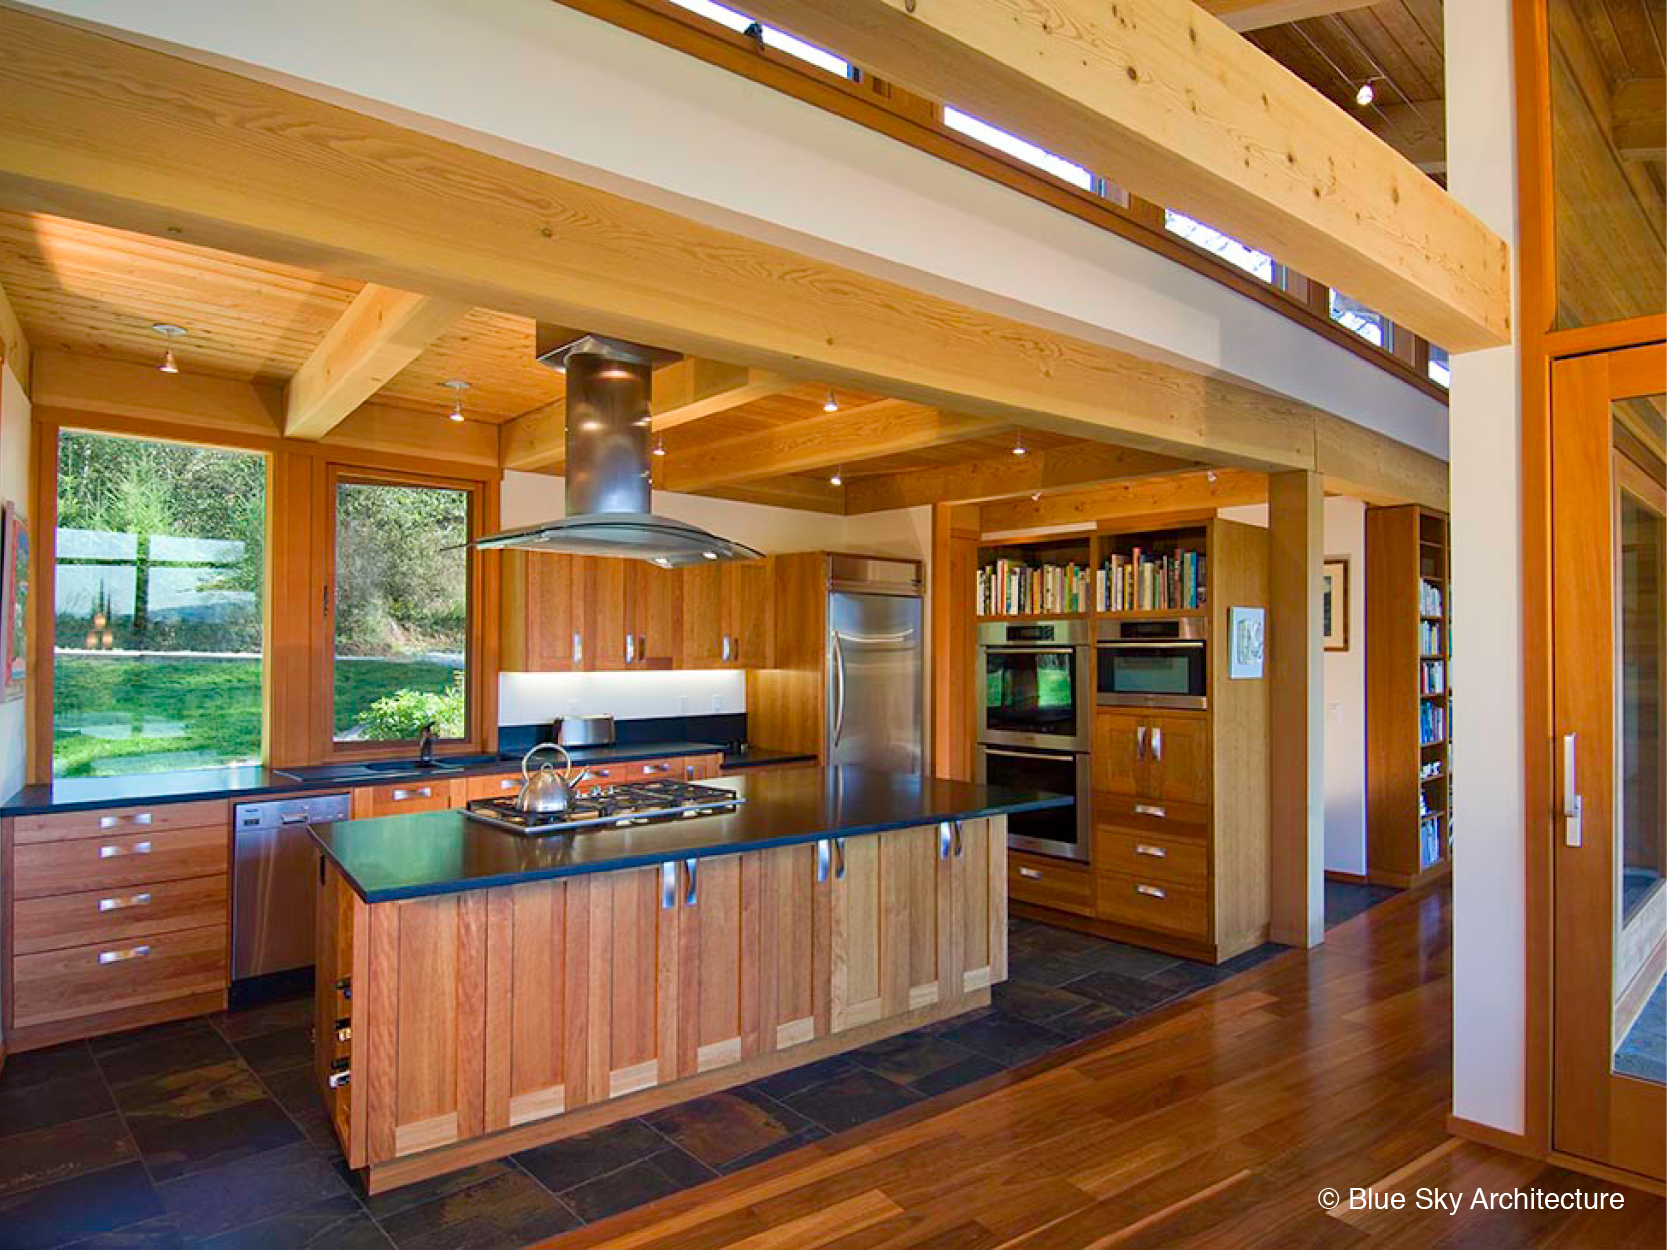 HollyFarm-house-interior-kitchen-wood-material.jpg